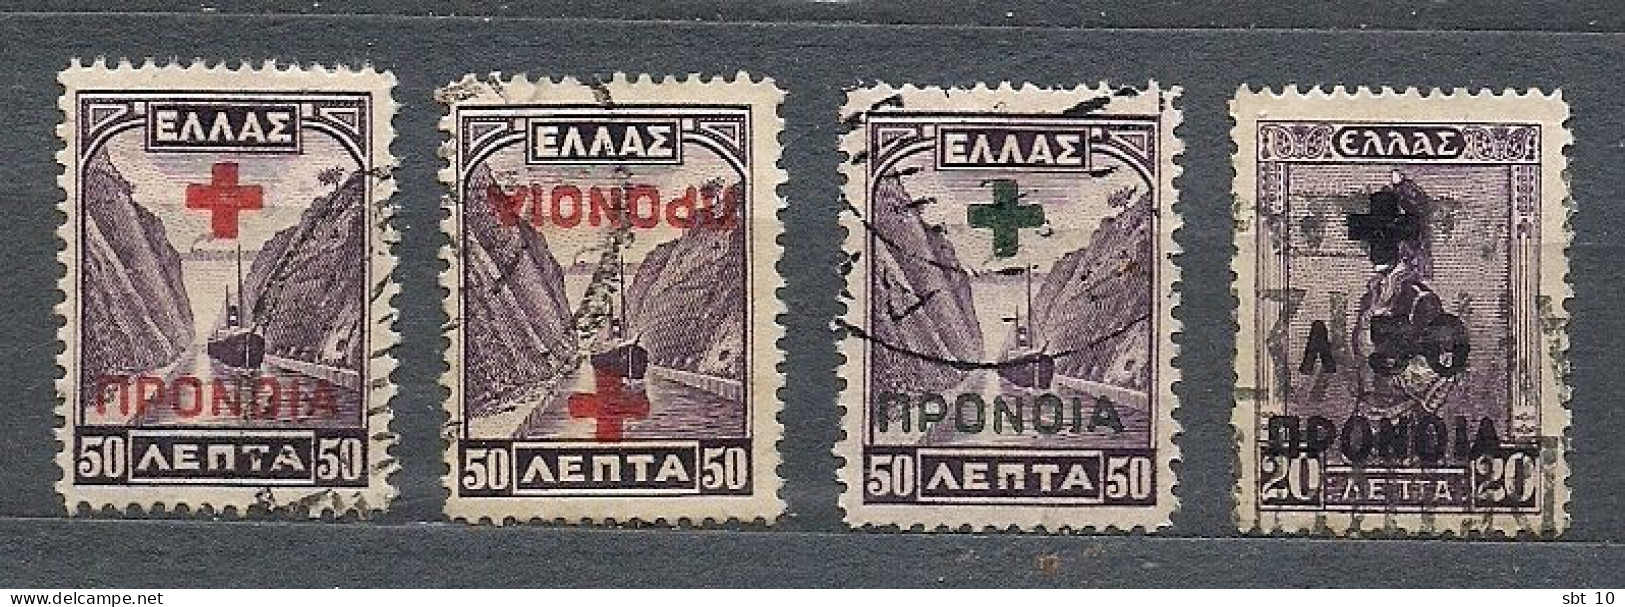 Greece 1937/38 - Social Welfare Fund Overprints - Set Used - Wohlfahrtsmarken